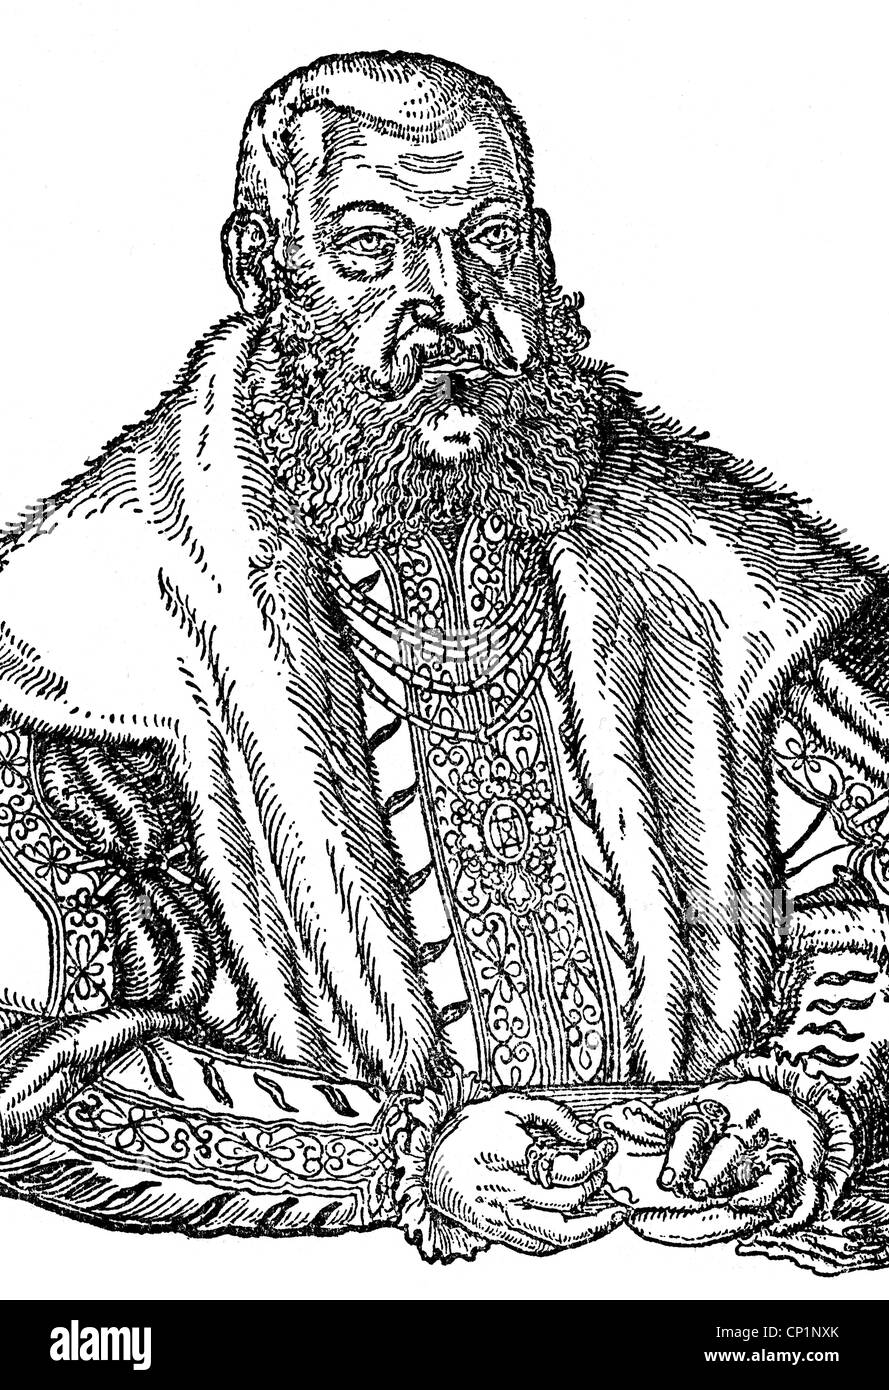 John George, 11.9.1525 - 8.1.1598, Elector of Brandenburg 3.1.1571 - 8.1.1598, half length, woodcut after Lucas Cranch, 16th century, Stock Photo